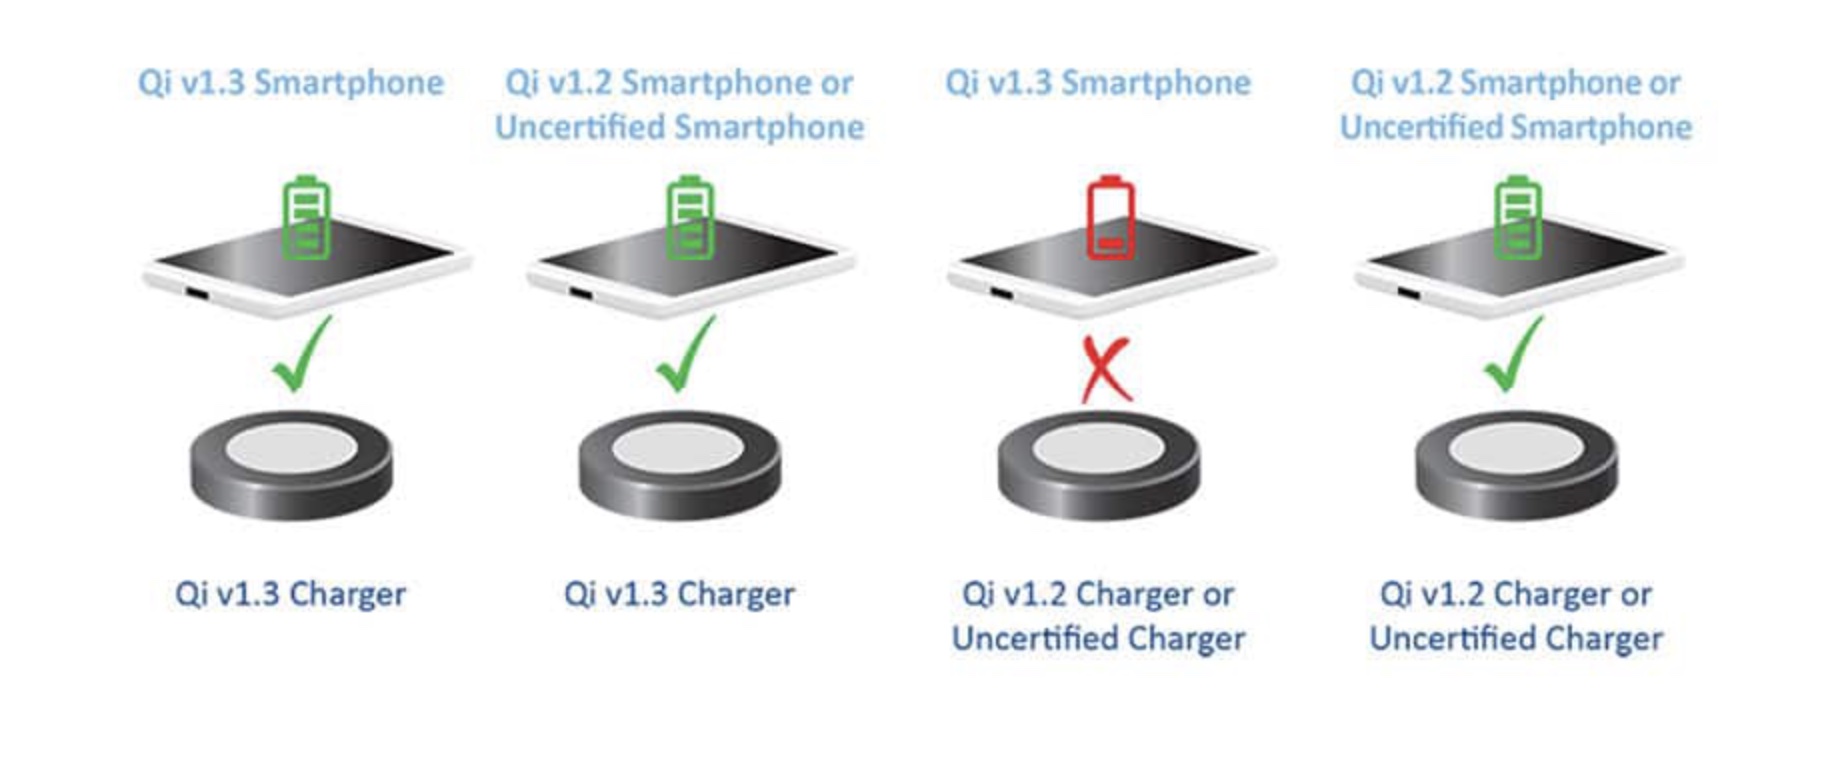 QI2 無線充電 MagSafe 特色 比較 選擇